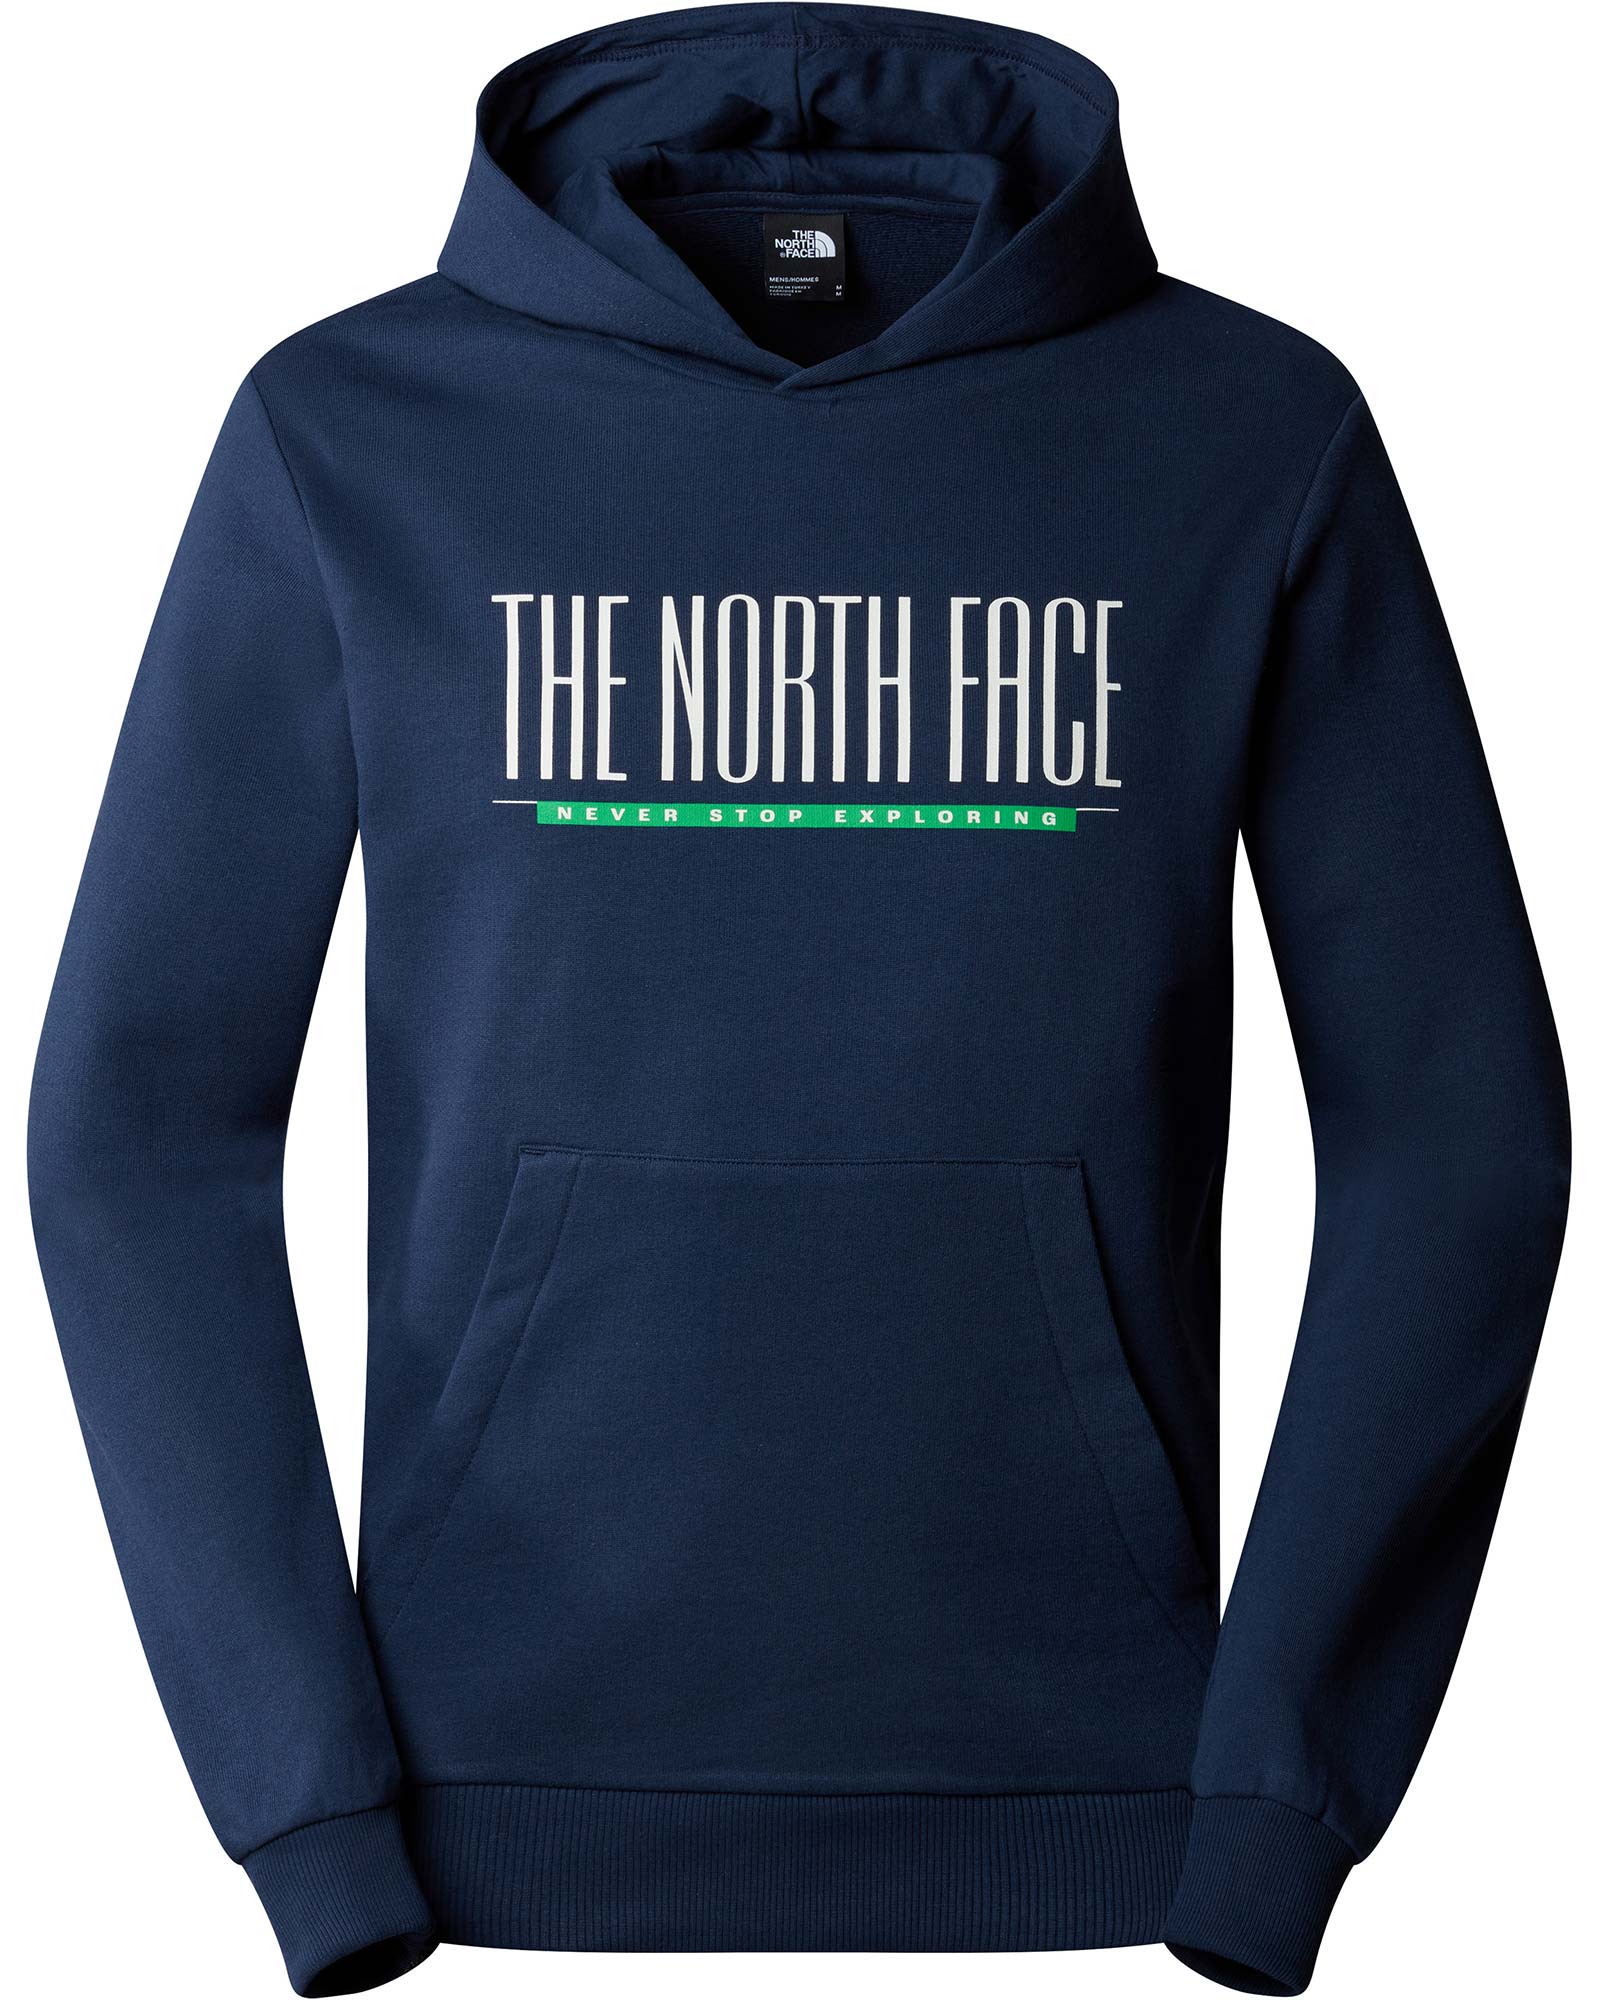 The North Face Men's TNF Est 1966 Hoodie